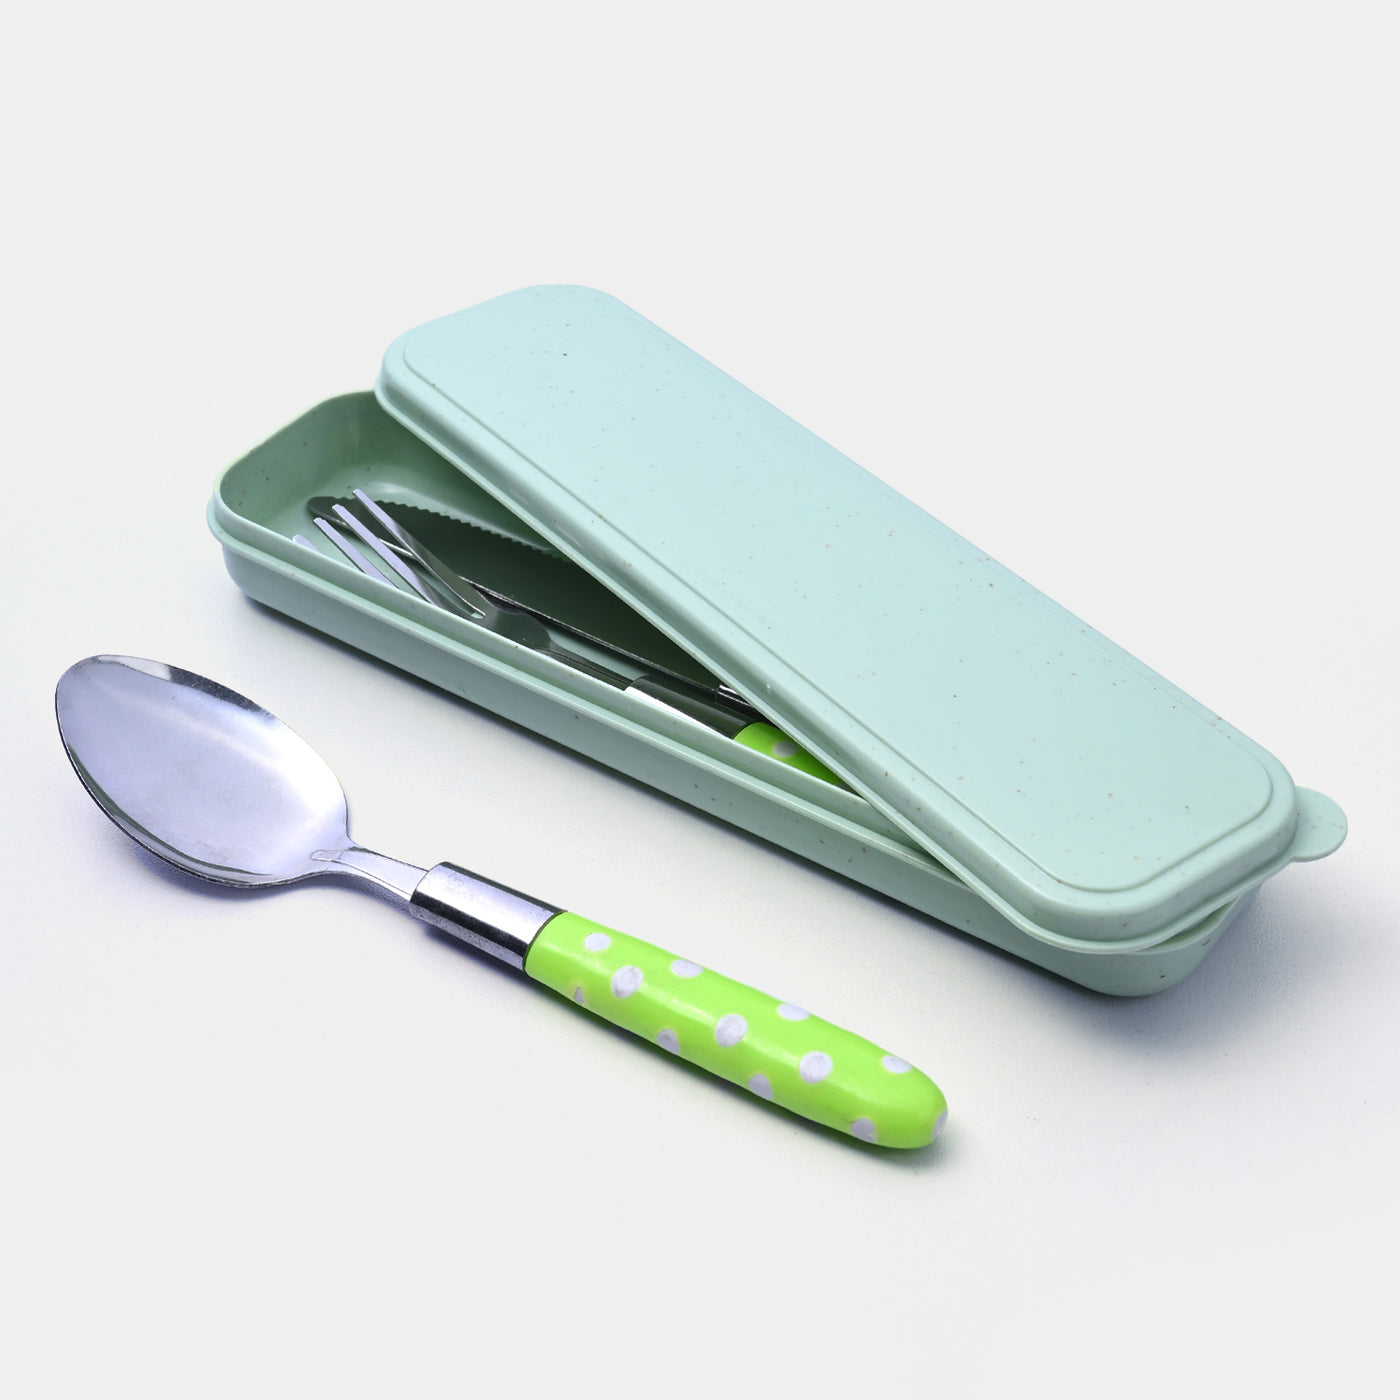 Stainless Steel Baby Tableware Cutlery Set | 3PCs